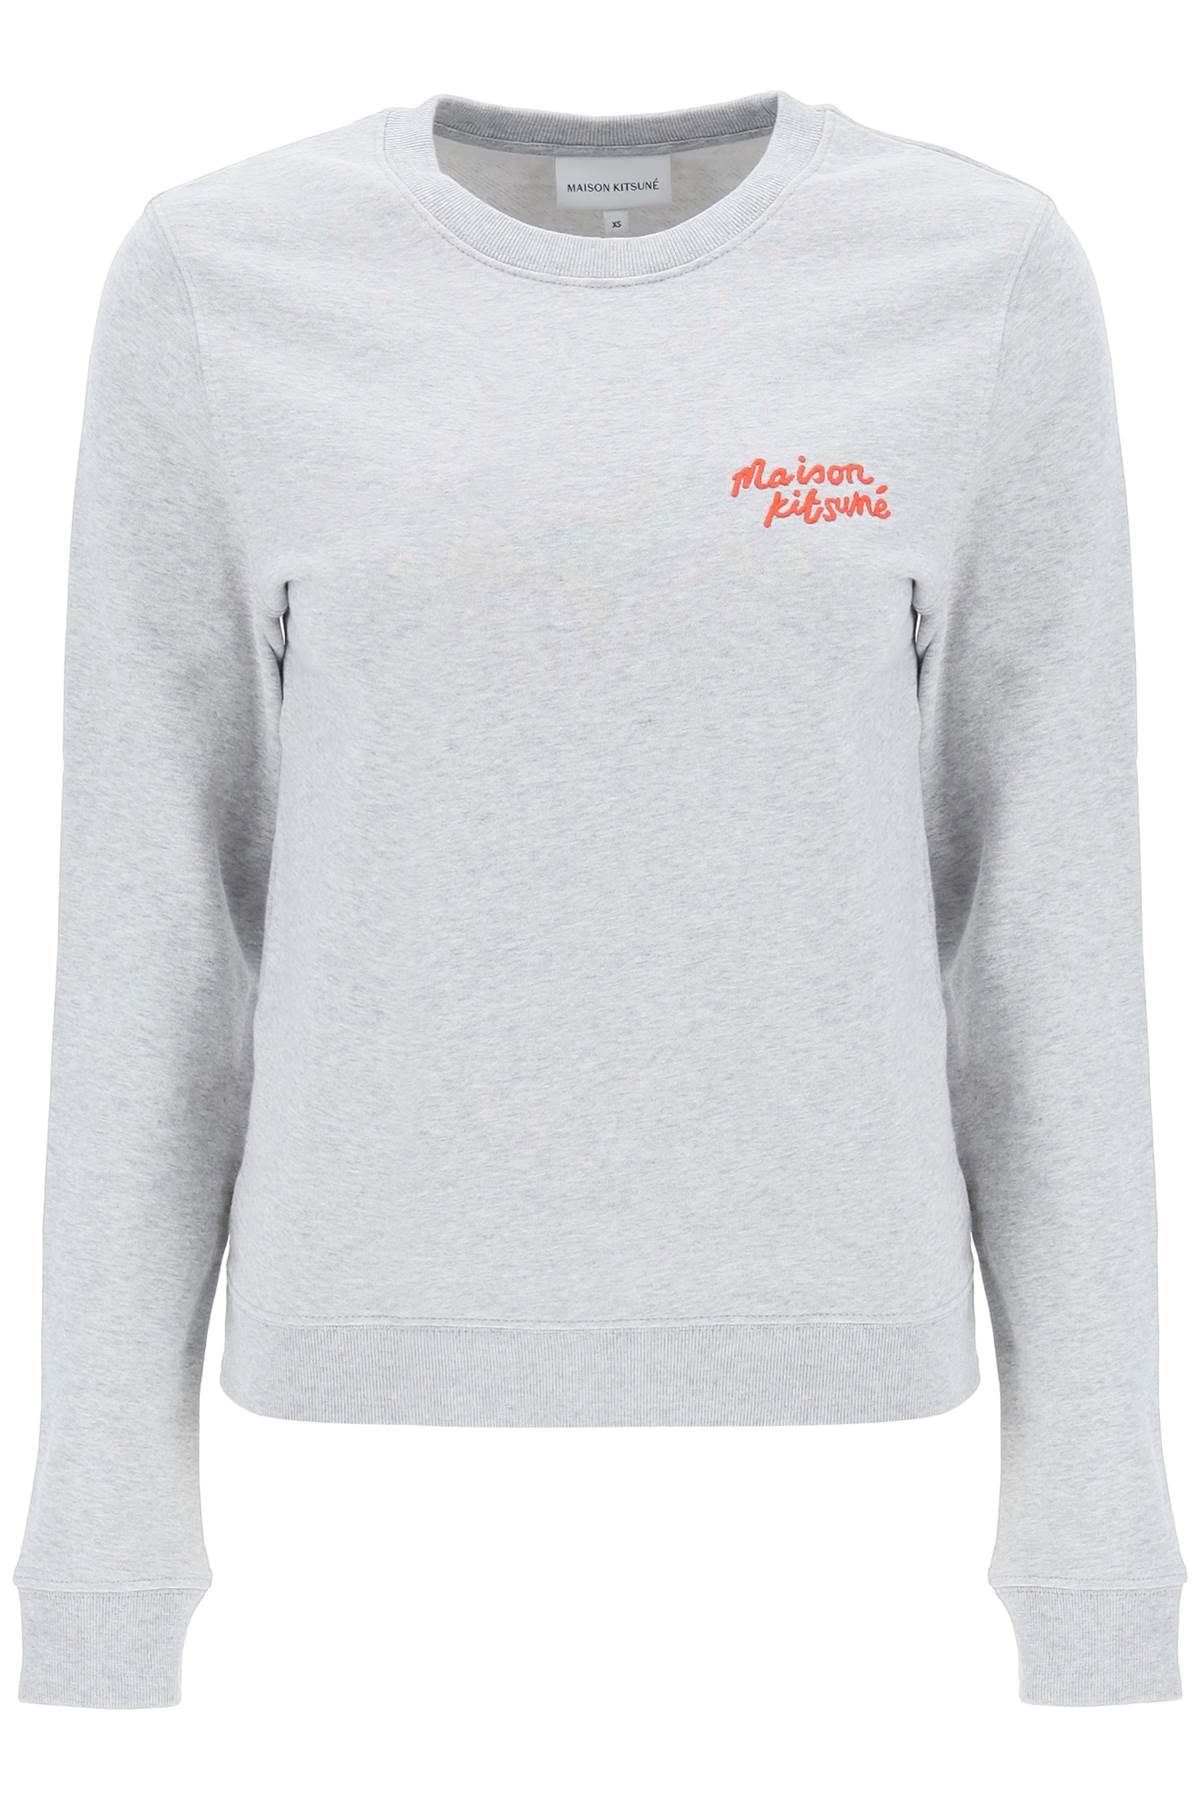 Maison kitsune crew-neck sweatshirt with logo lettering-0